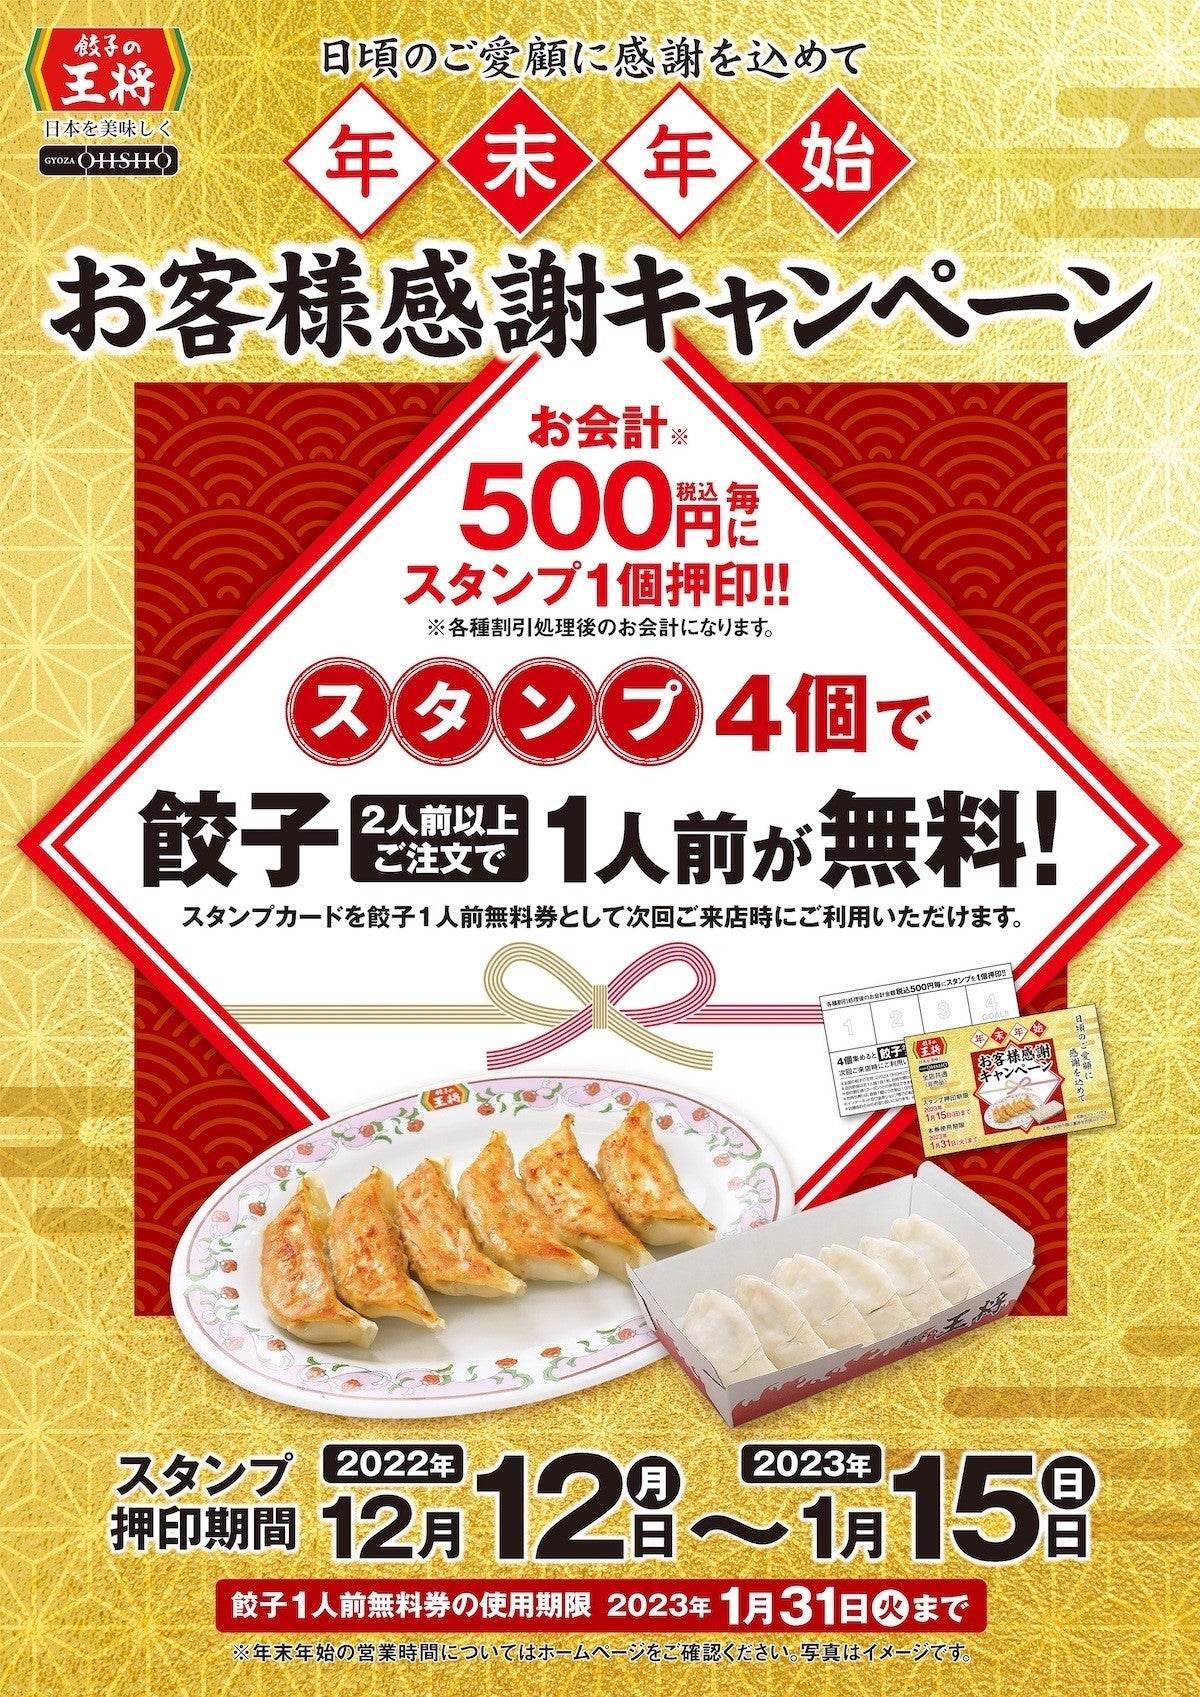 餃子の王将 12,000円分 (有効期限:2022/6/30)送料込（補償有） www